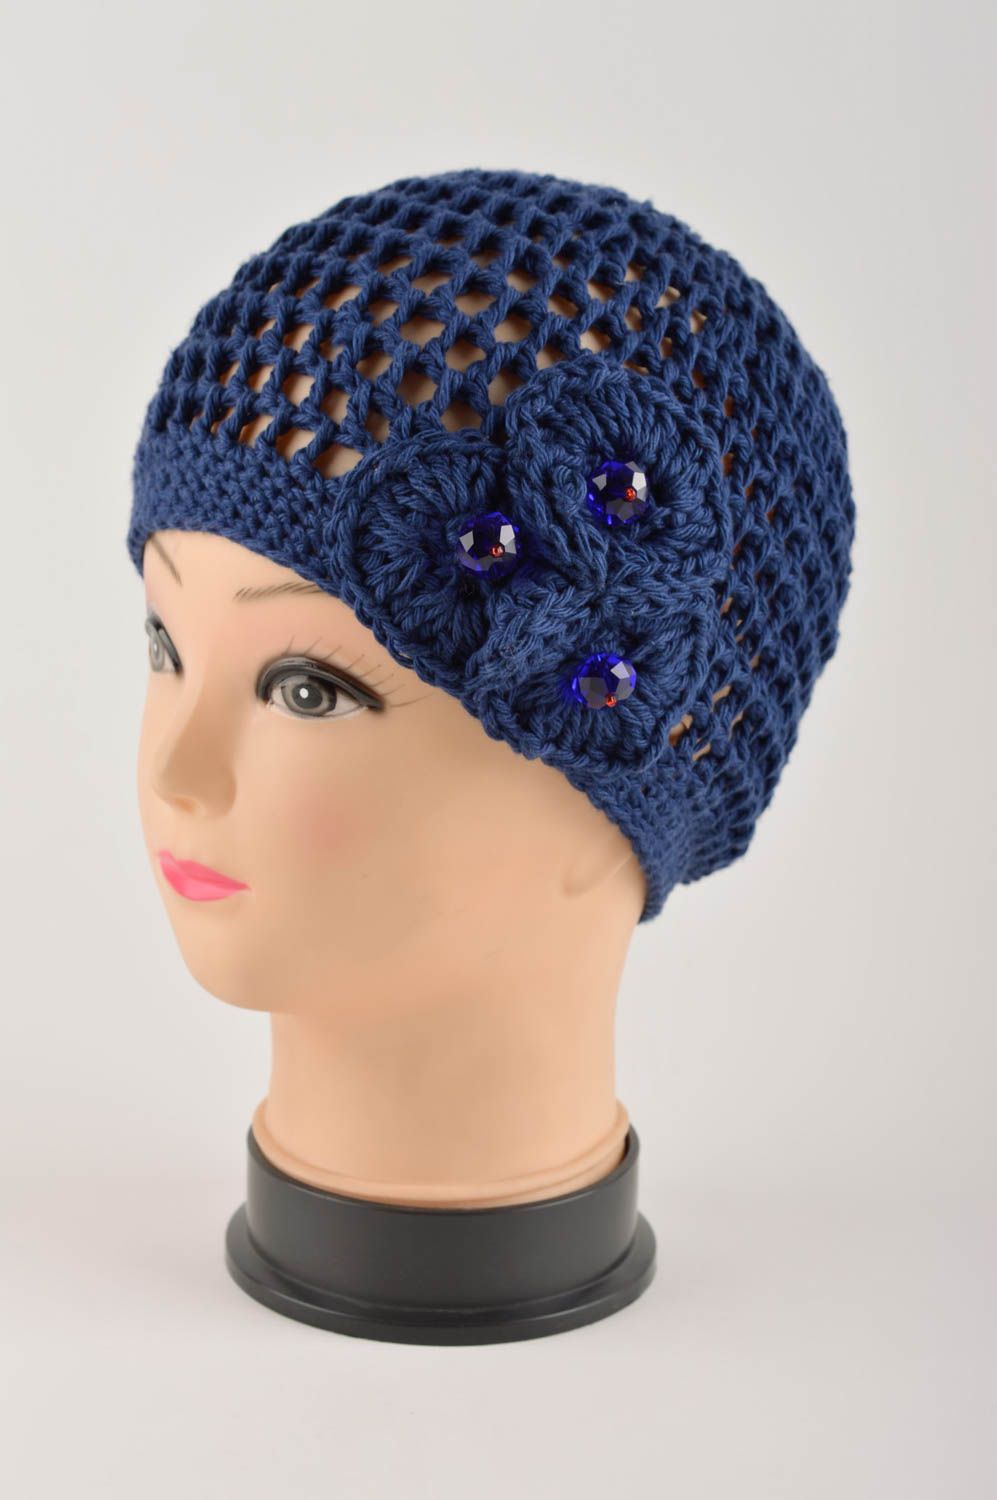 Handmade crochet hat ladies hats womens hats designer accessories gifts for her photo 2